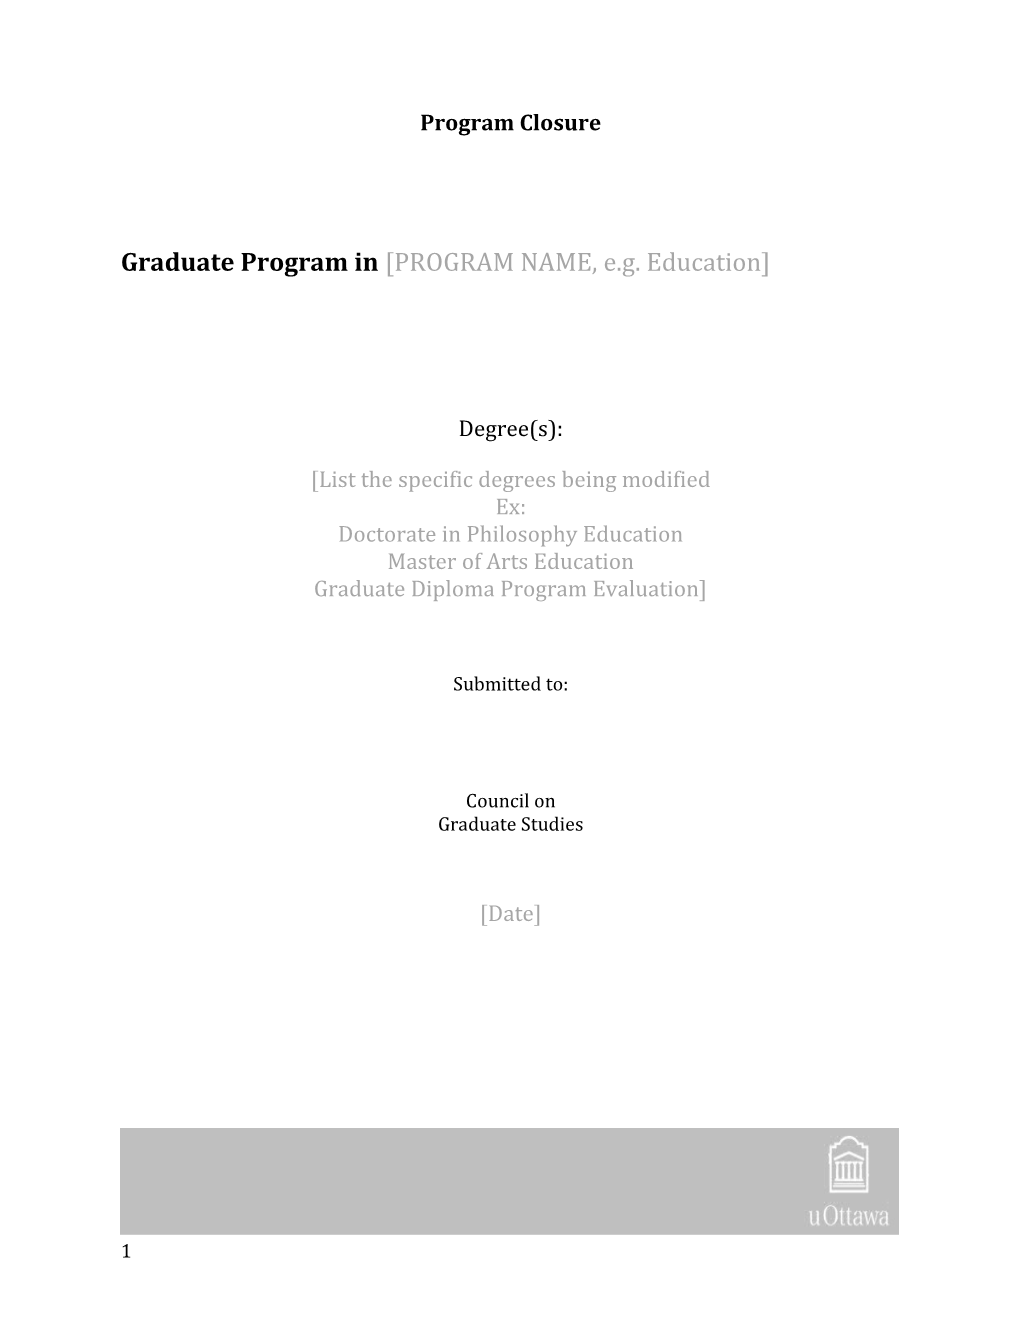 Graduate Program in PROGRAM NAME, E.G. Education